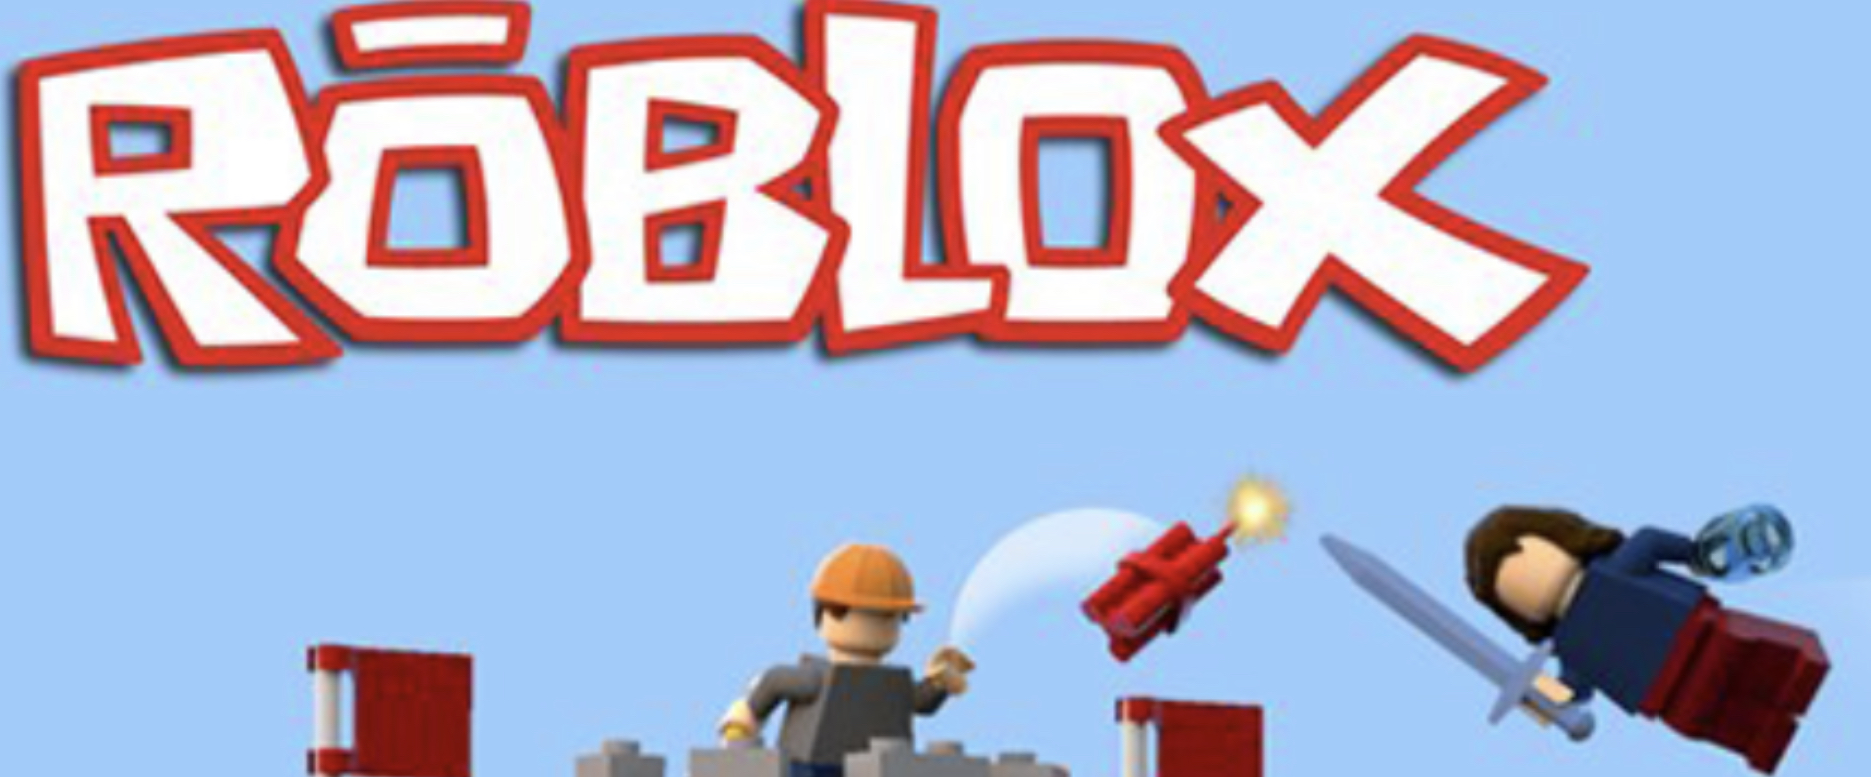 roblox player beta download